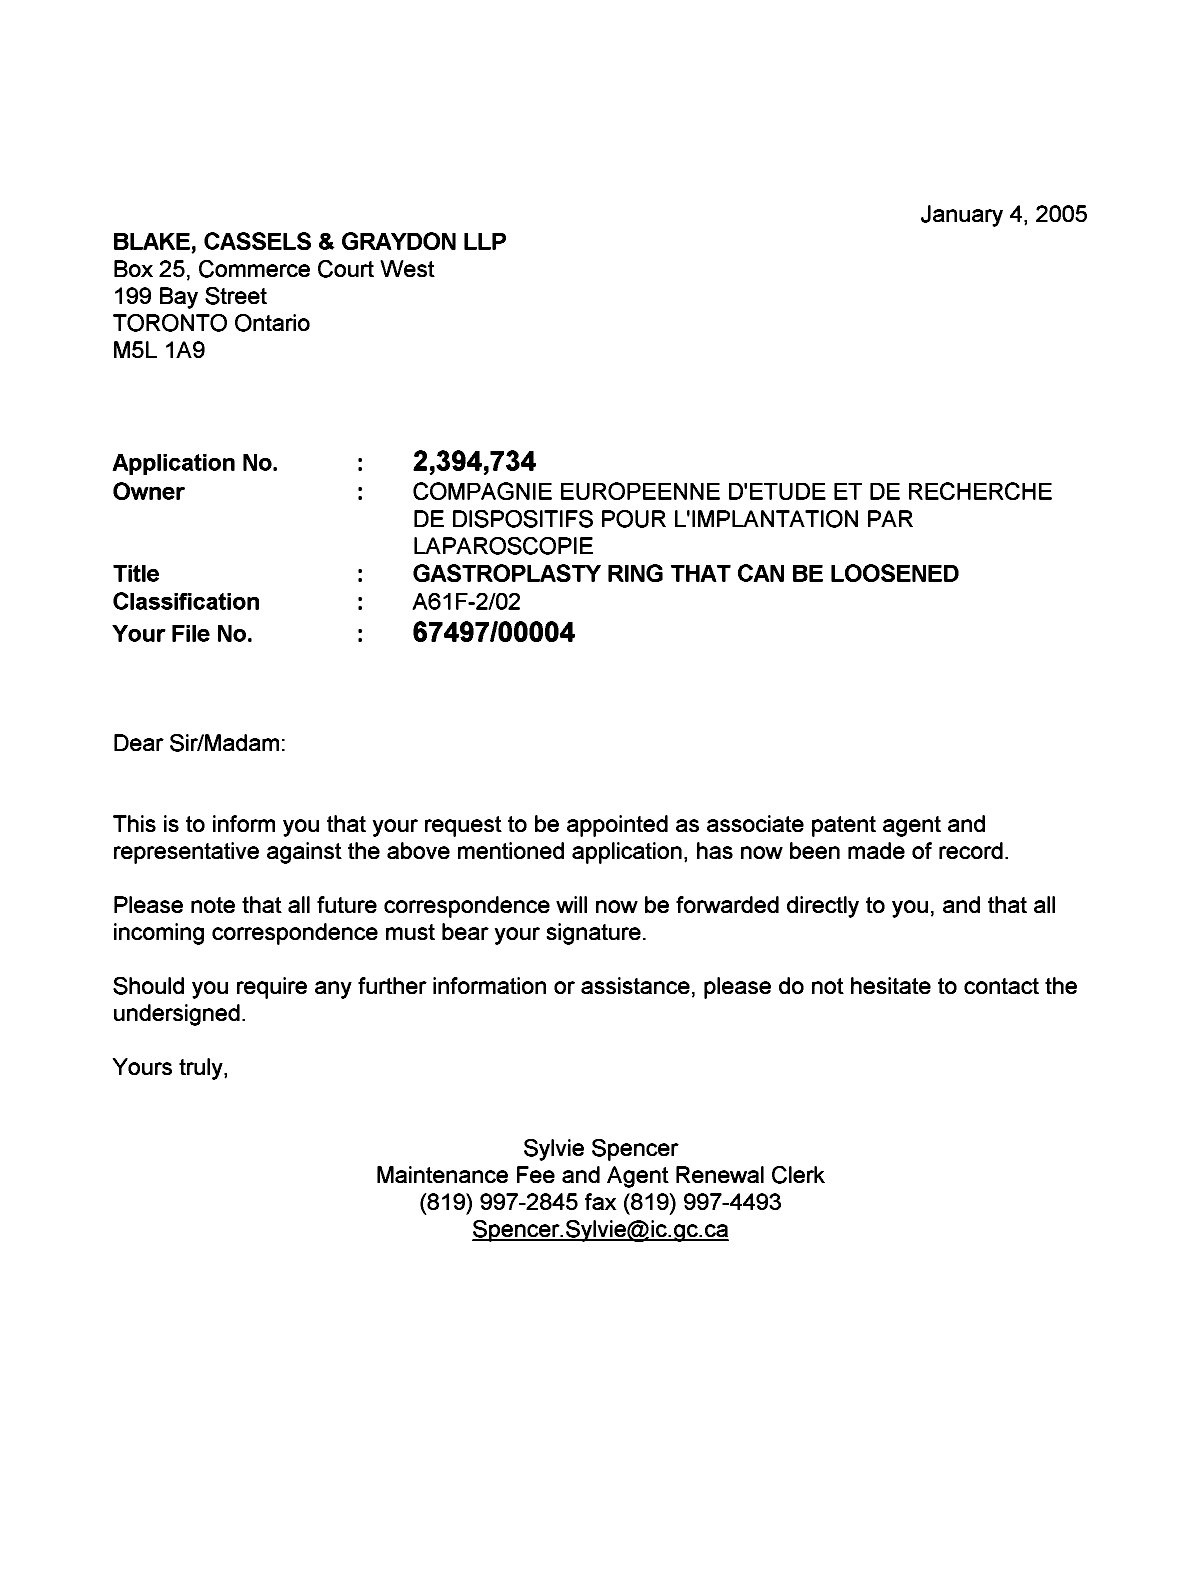 Canadian Patent Document 2394734. Correspondence 20050104. Image 1 of 1